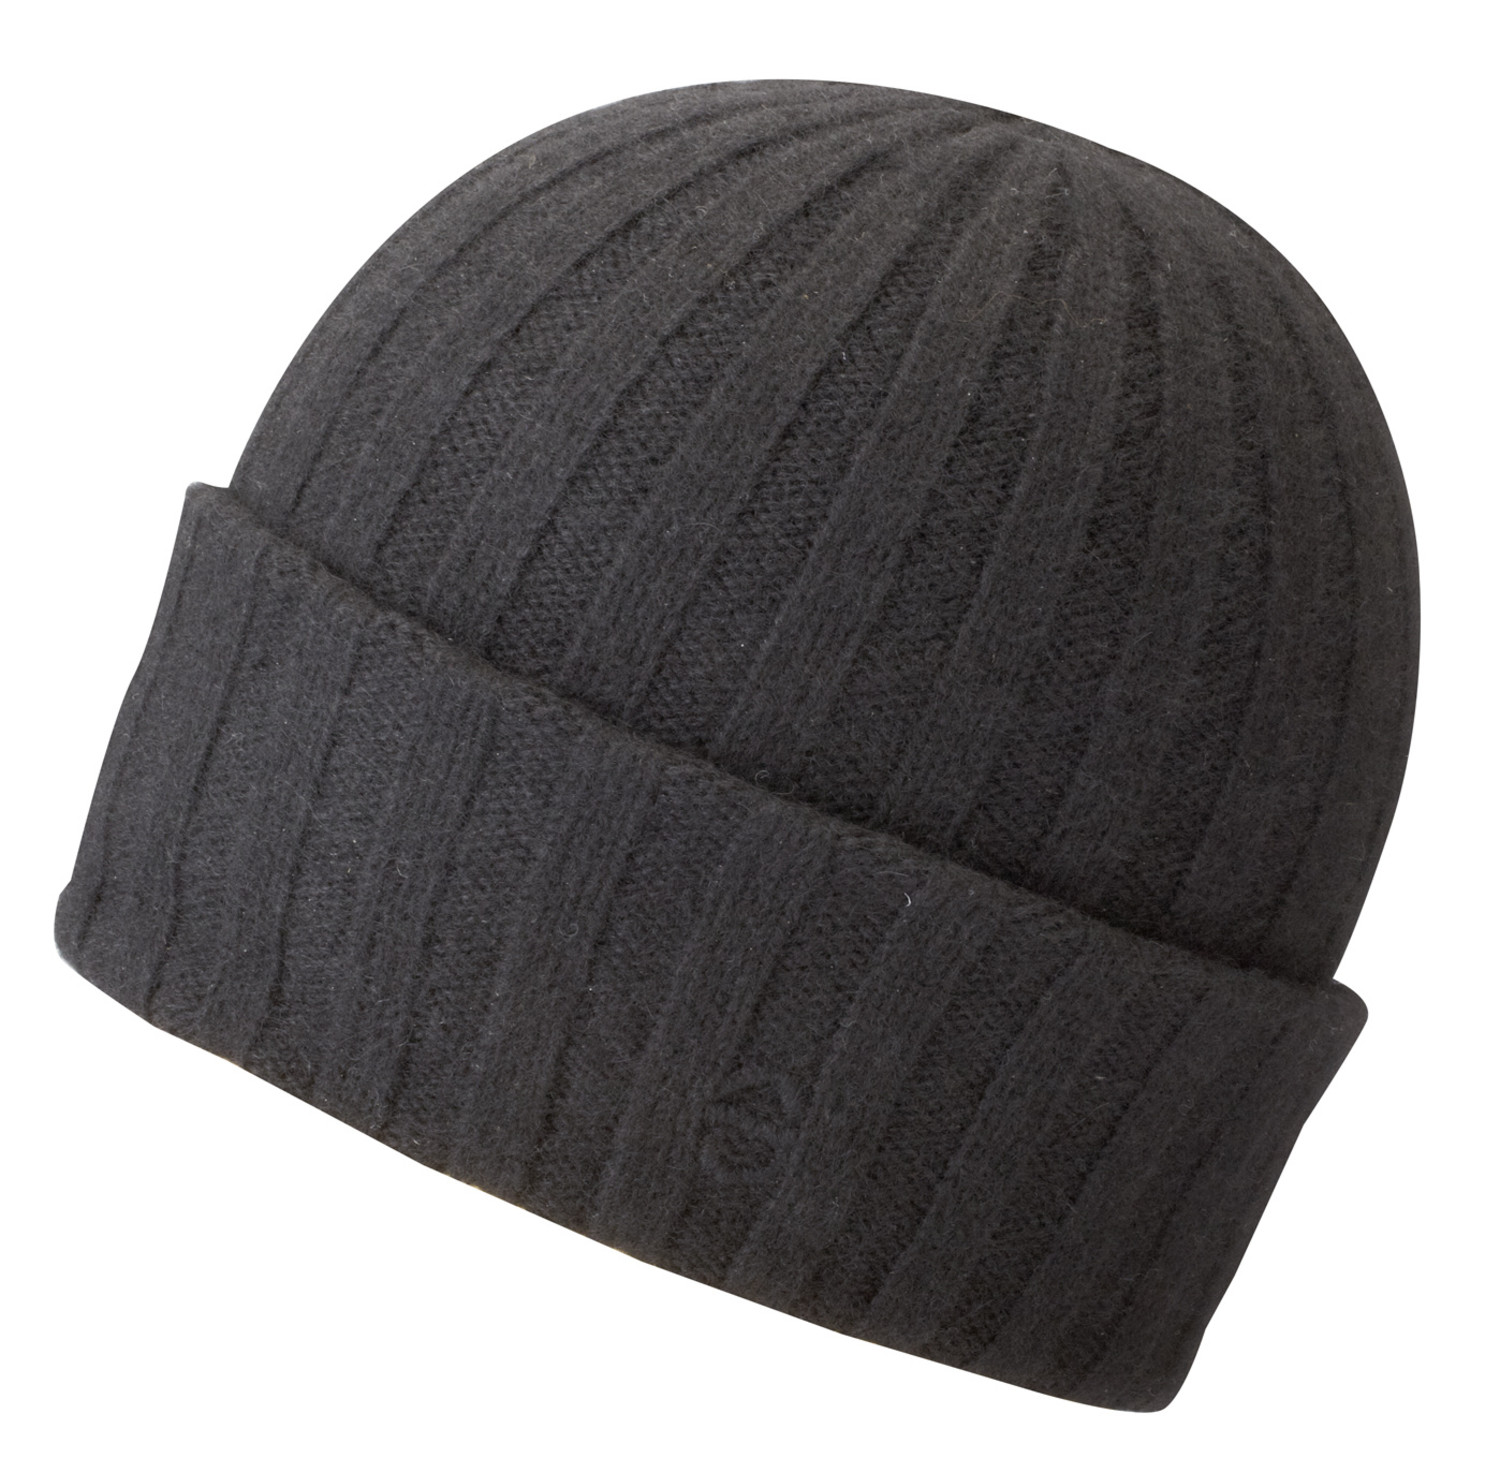 https://cdn.shoplightspeed.com/shops/632556/files/40485319/1500x4000x3/stetson-europe-surth-cashmere-knit-hat-stetson-eur.jpg